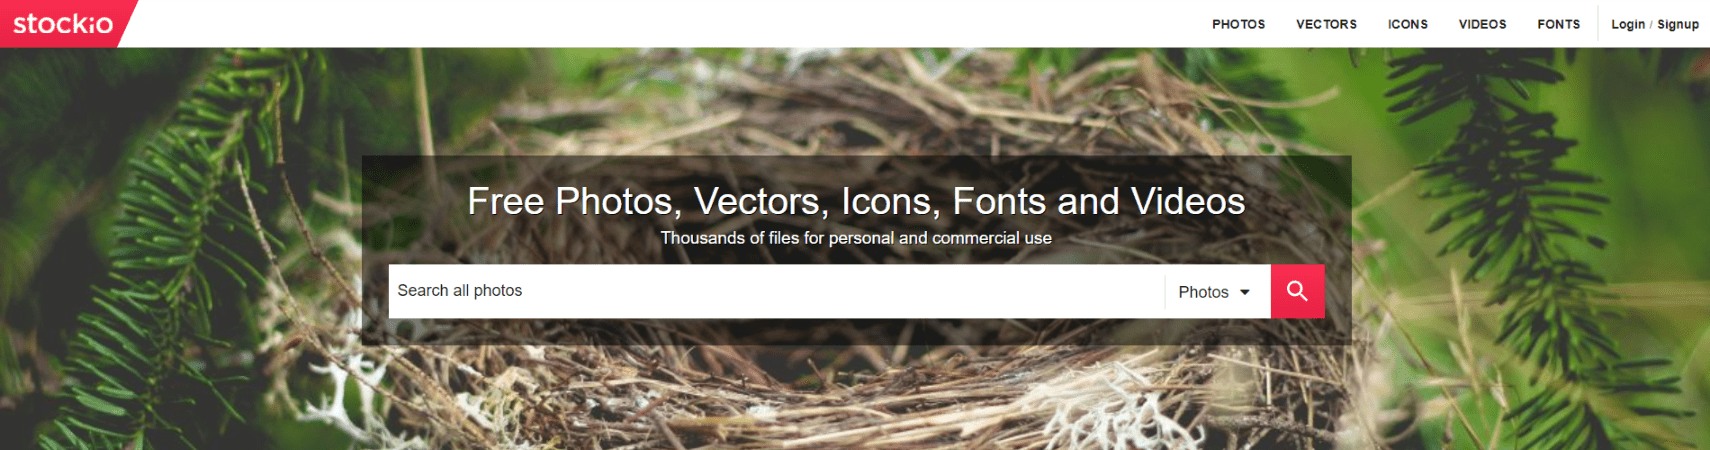 Stockio.com – Free Photos, Fonts, Vectors, Icons and Videos